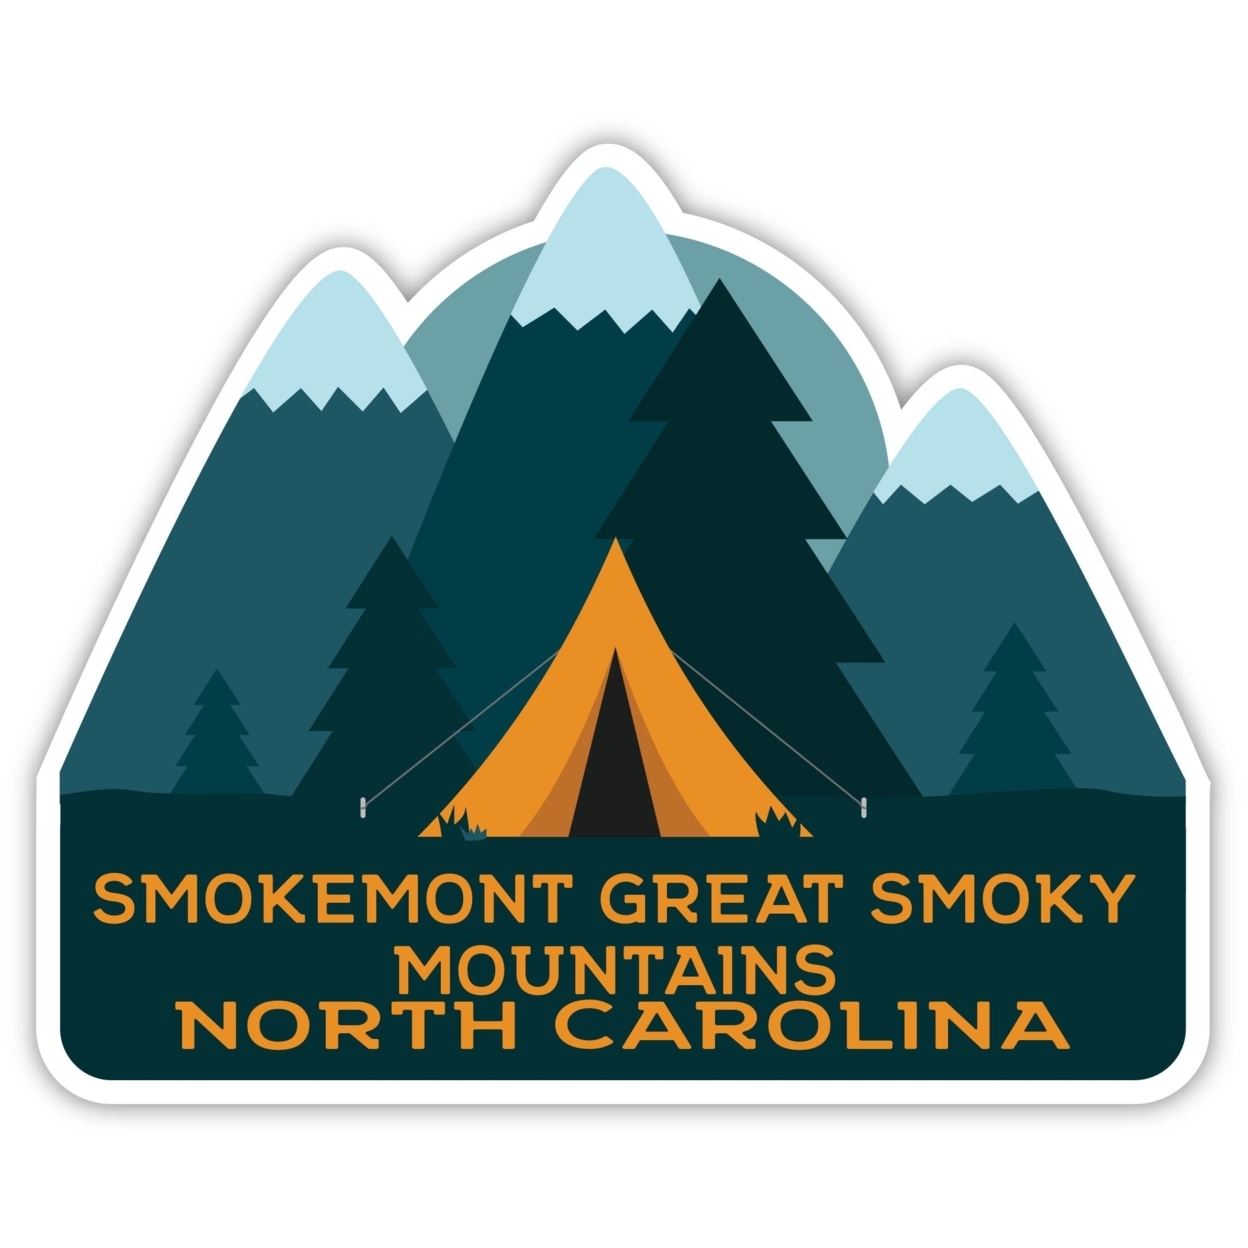 Smokemont Great Smoky Mountains North Carolina Souvenir Decorative Stickers (Choose Theme And Size) - Single Unit, 2-Inch, Tent